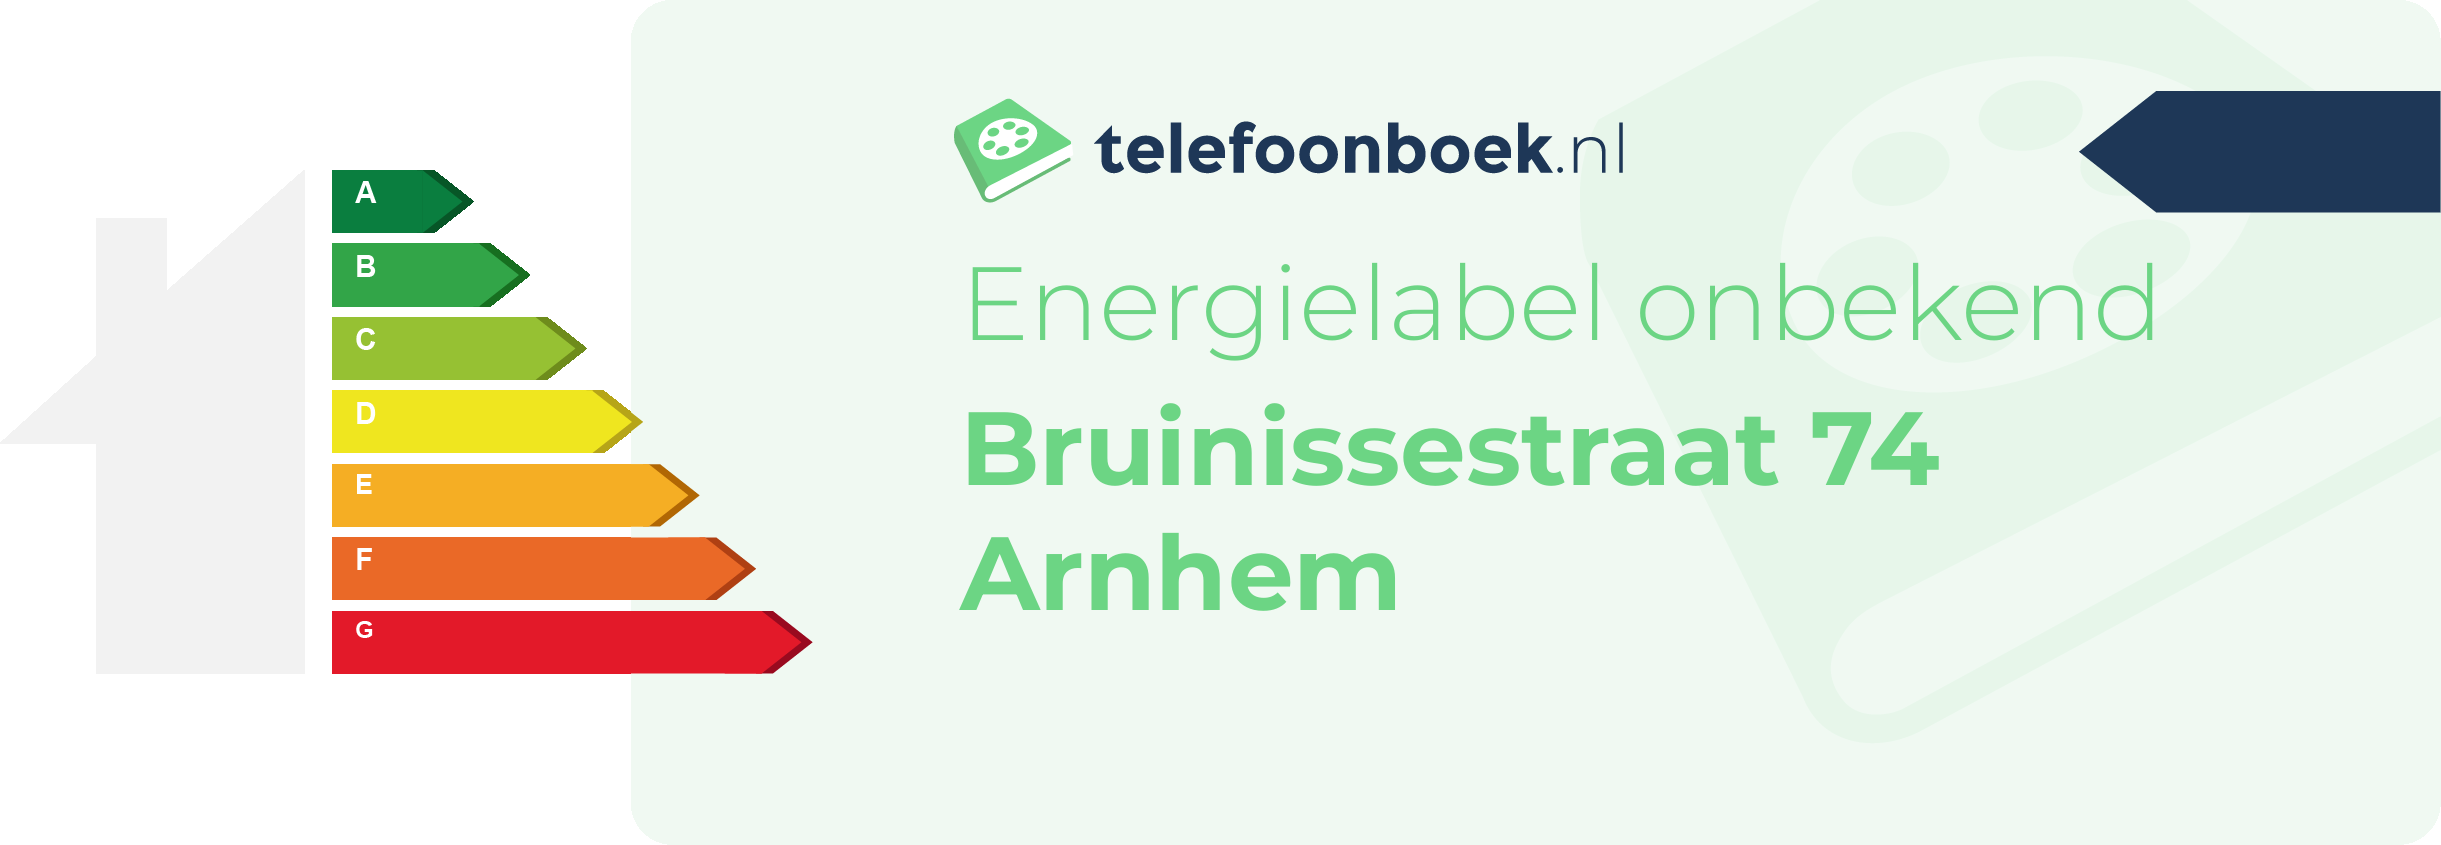 Energielabel Bruinissestraat 74 Arnhem